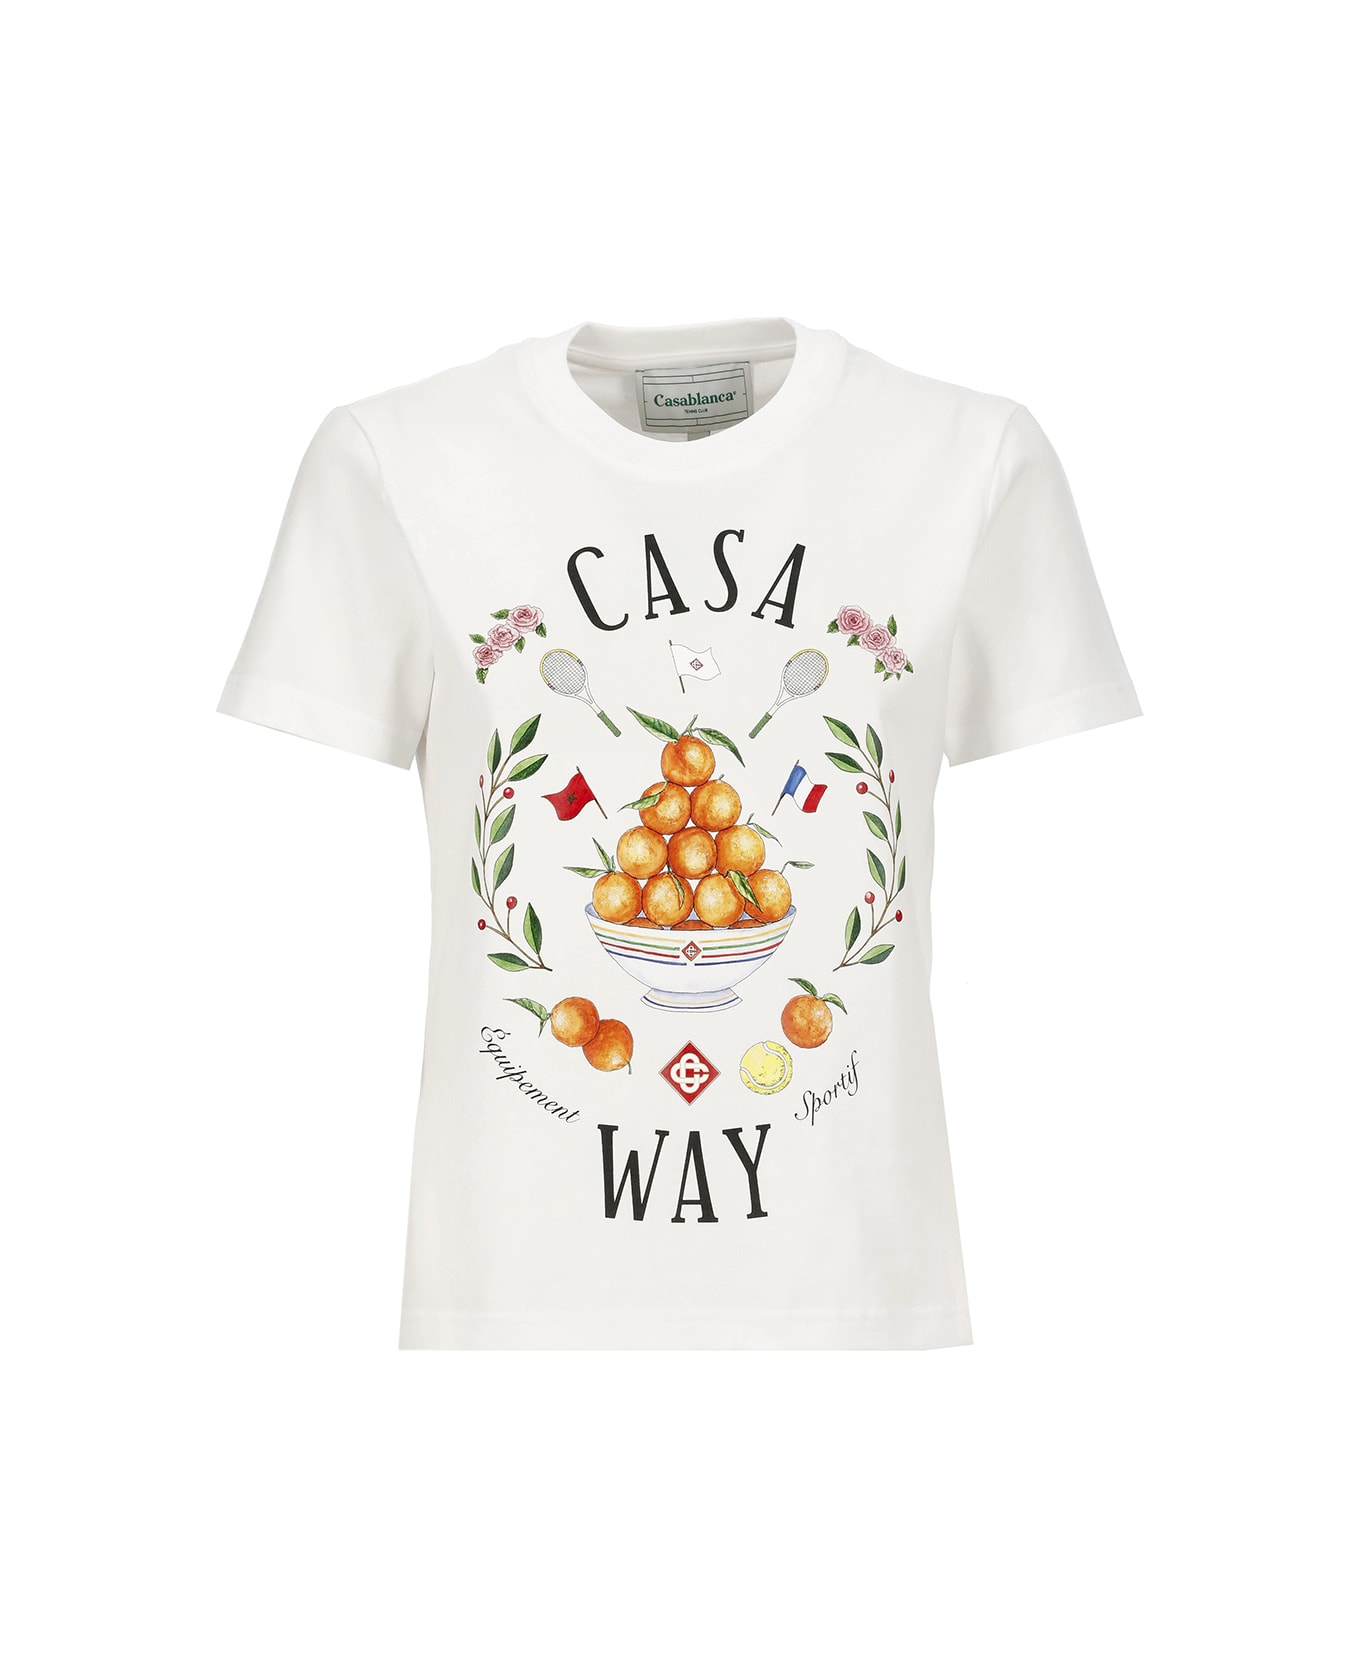 Casablanca T-shirt - Casa Way Tシャツ